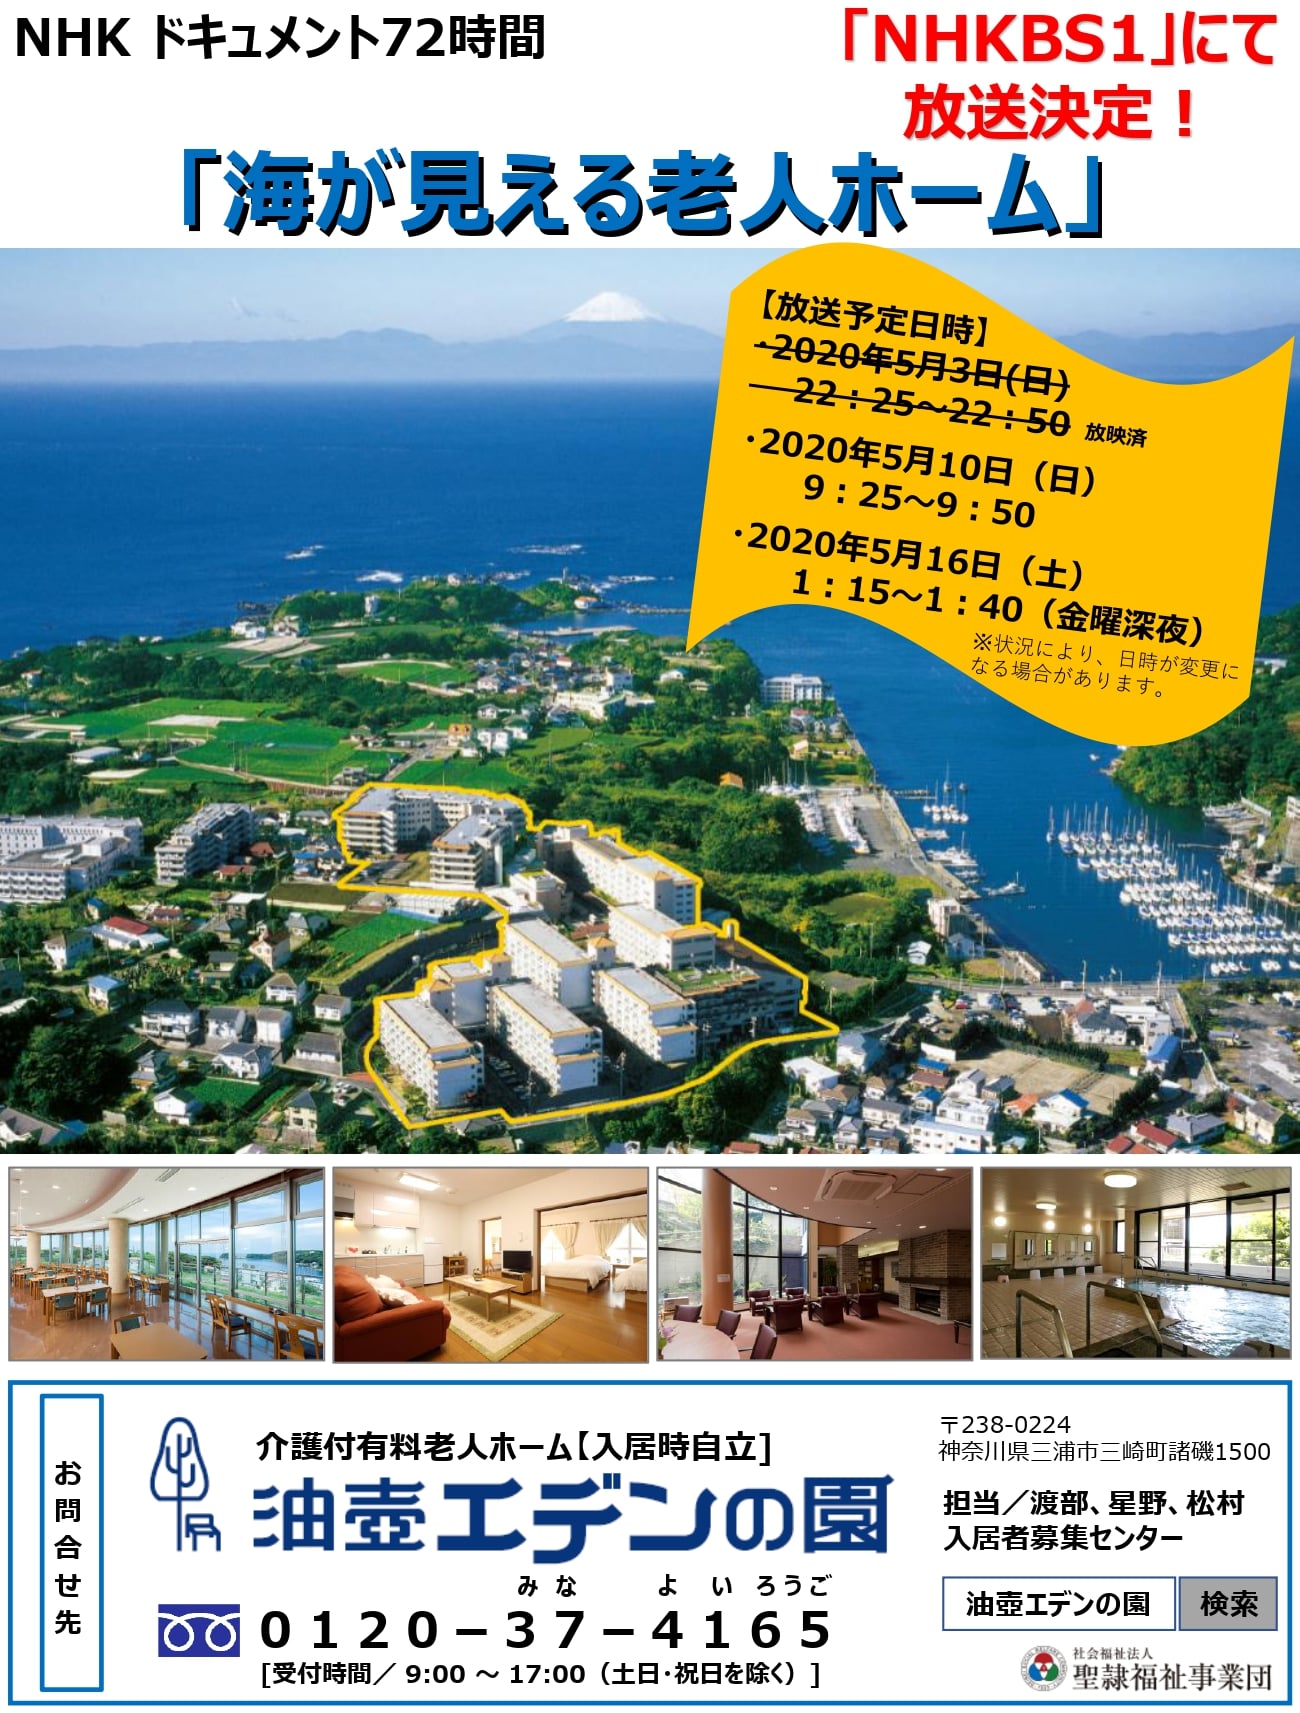 NHK-BS1にて「ドキュメント72時間『海が見える老人ホーム』」放映されました。